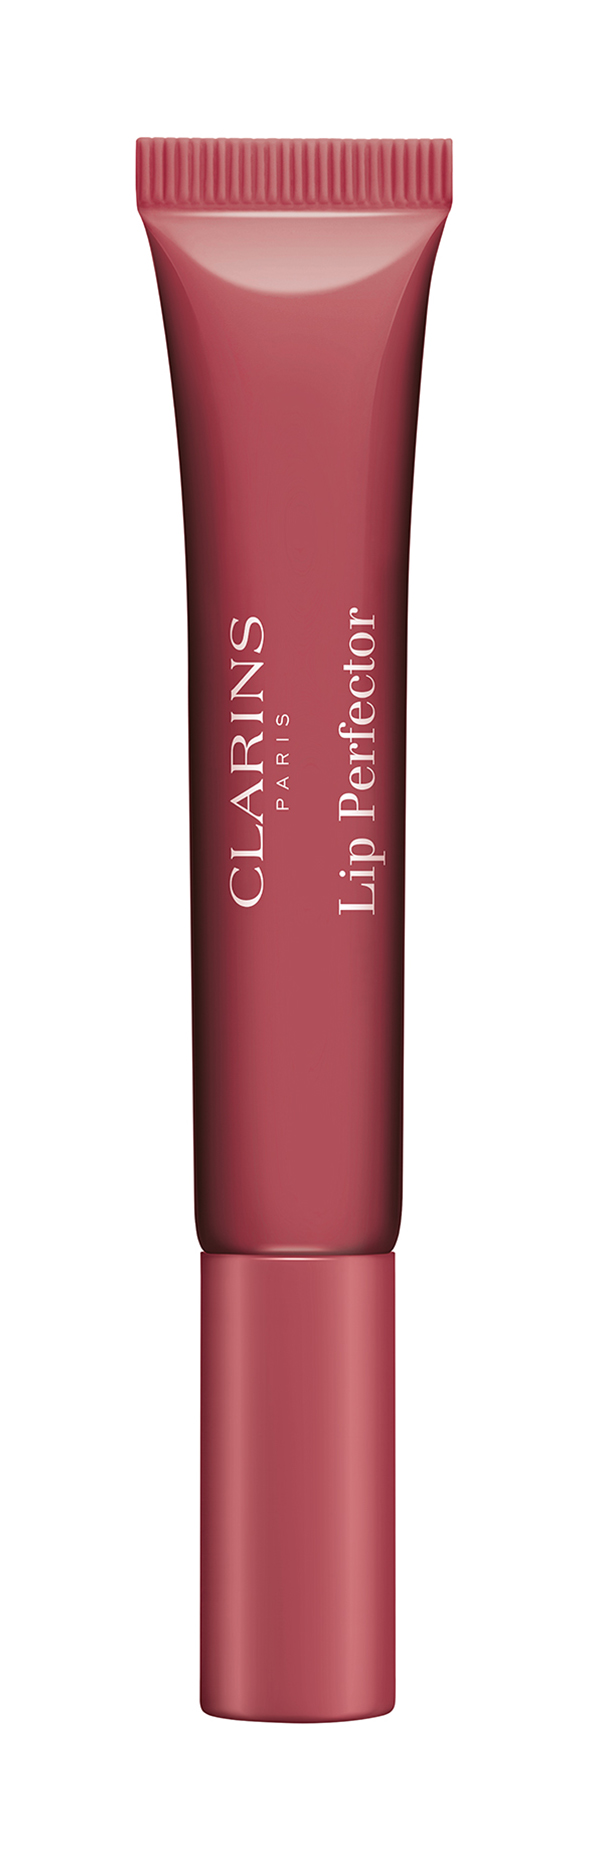 Блеск для губ Clarins Natural Lip Perfector 17 Intense maple, 12 мл